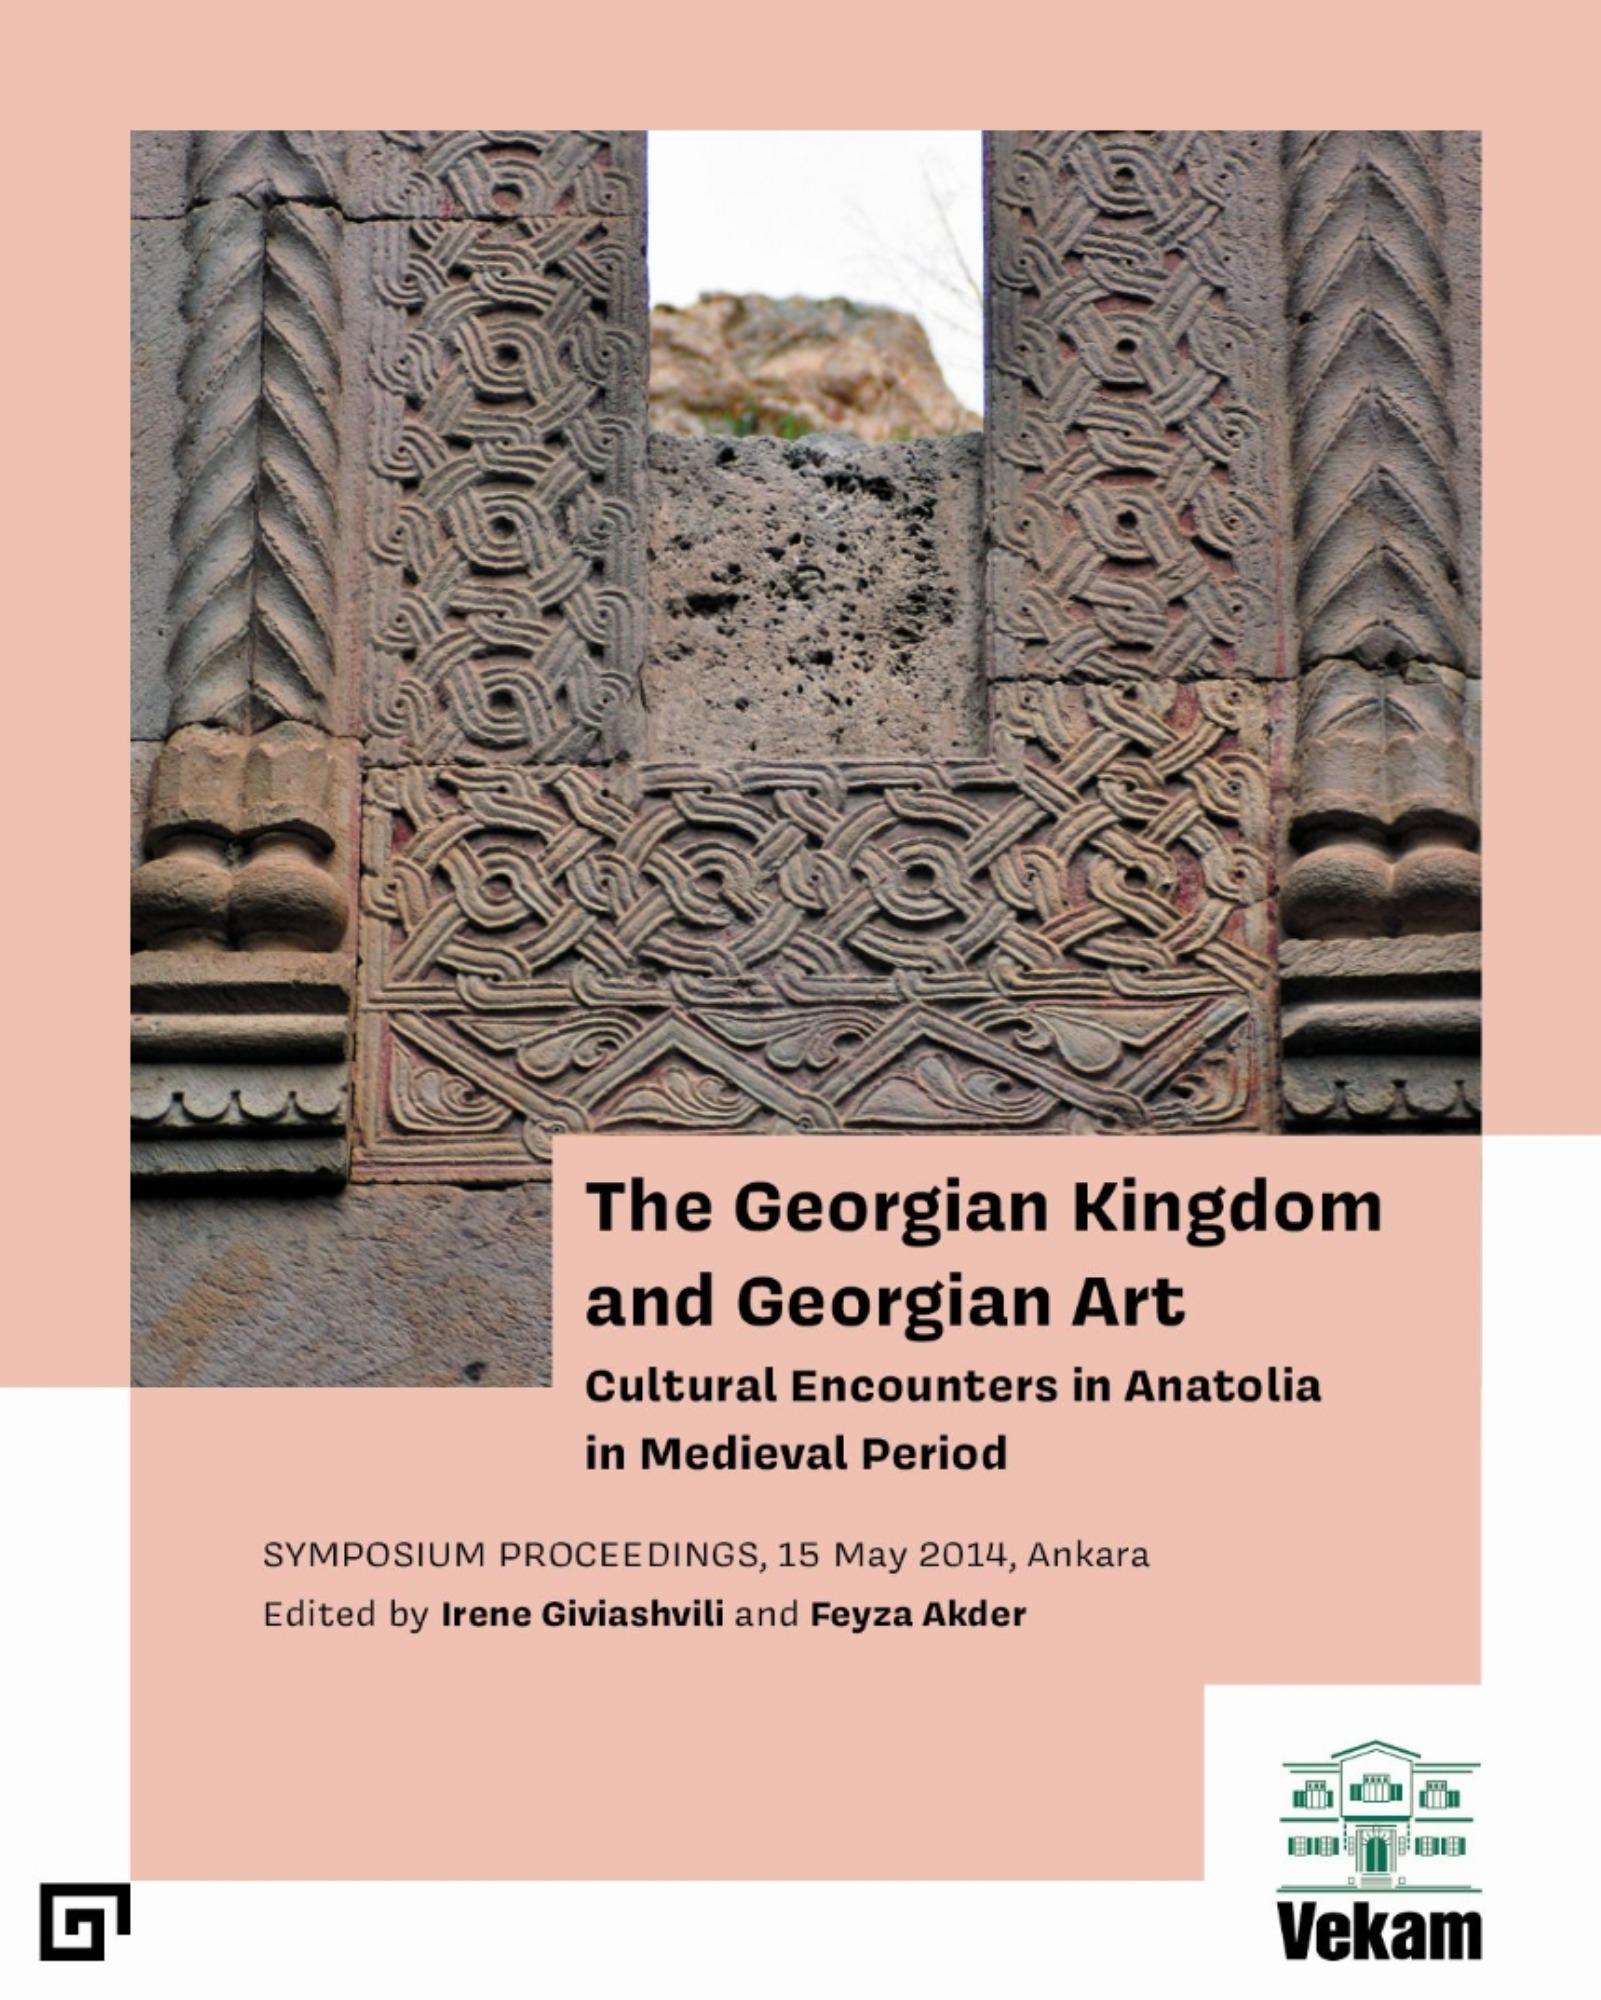 Giviashvili, Irene – Feyza Akder : The Georgian Kingdom and Georgian Art. Cultural Encounters in Anatolia in Medieval Period